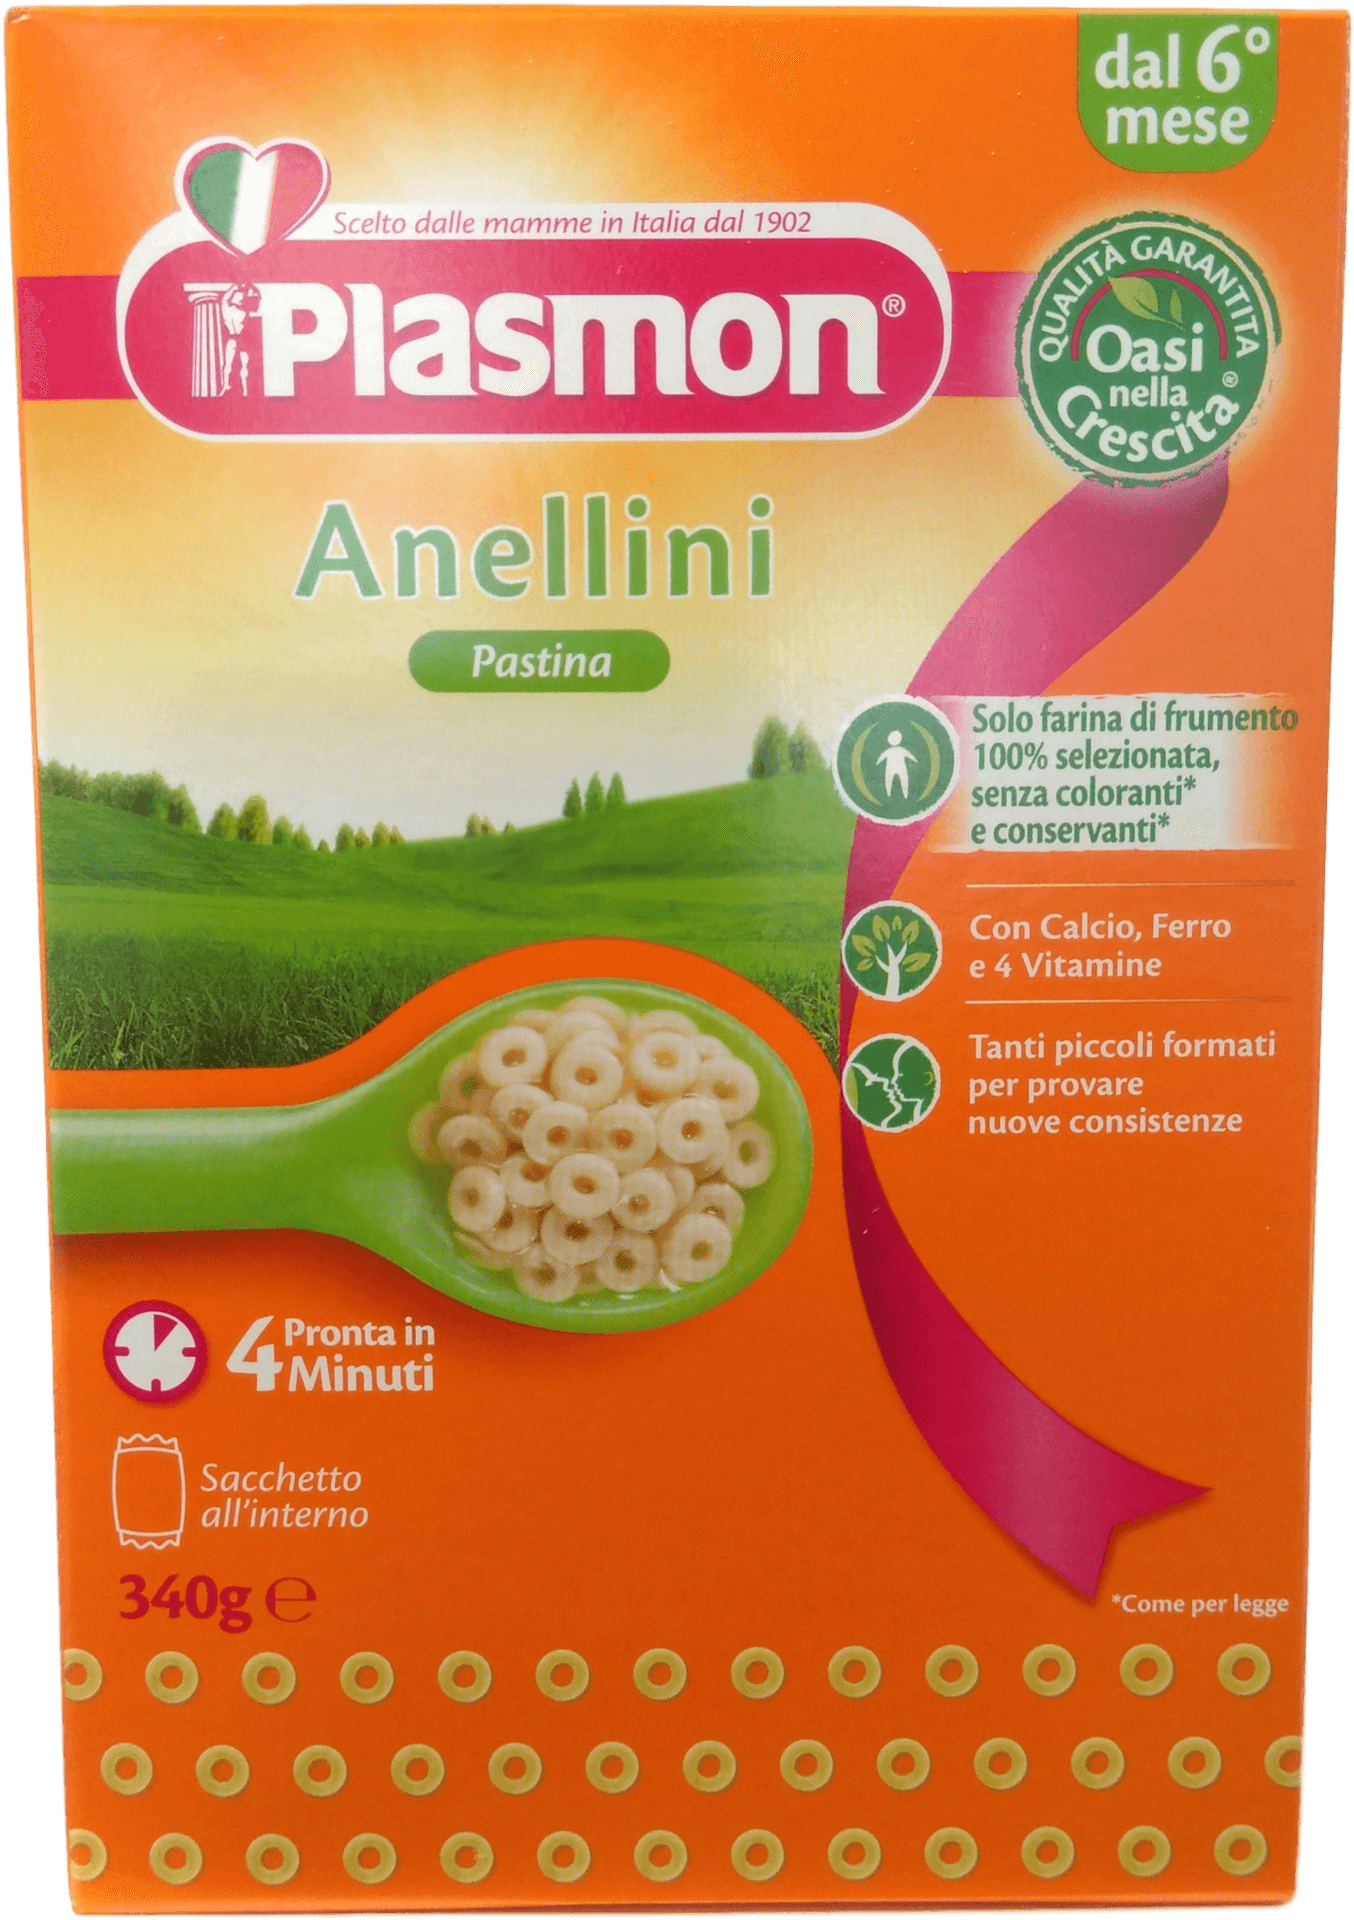 Plasmon Anellini Pasta Box PNG image